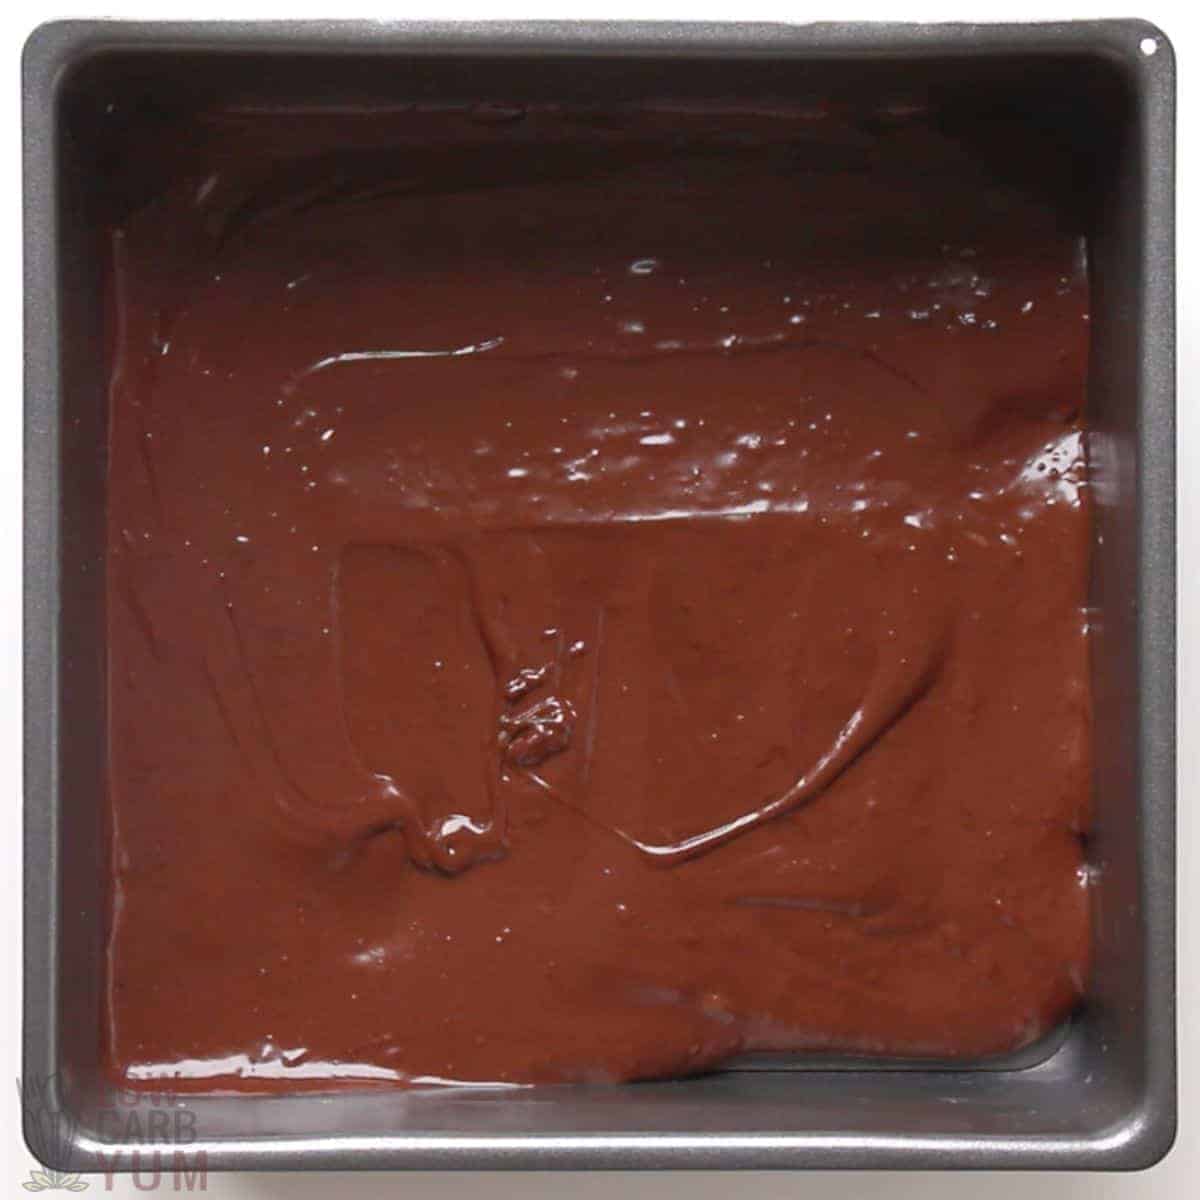 brownie batter in square baking pan.